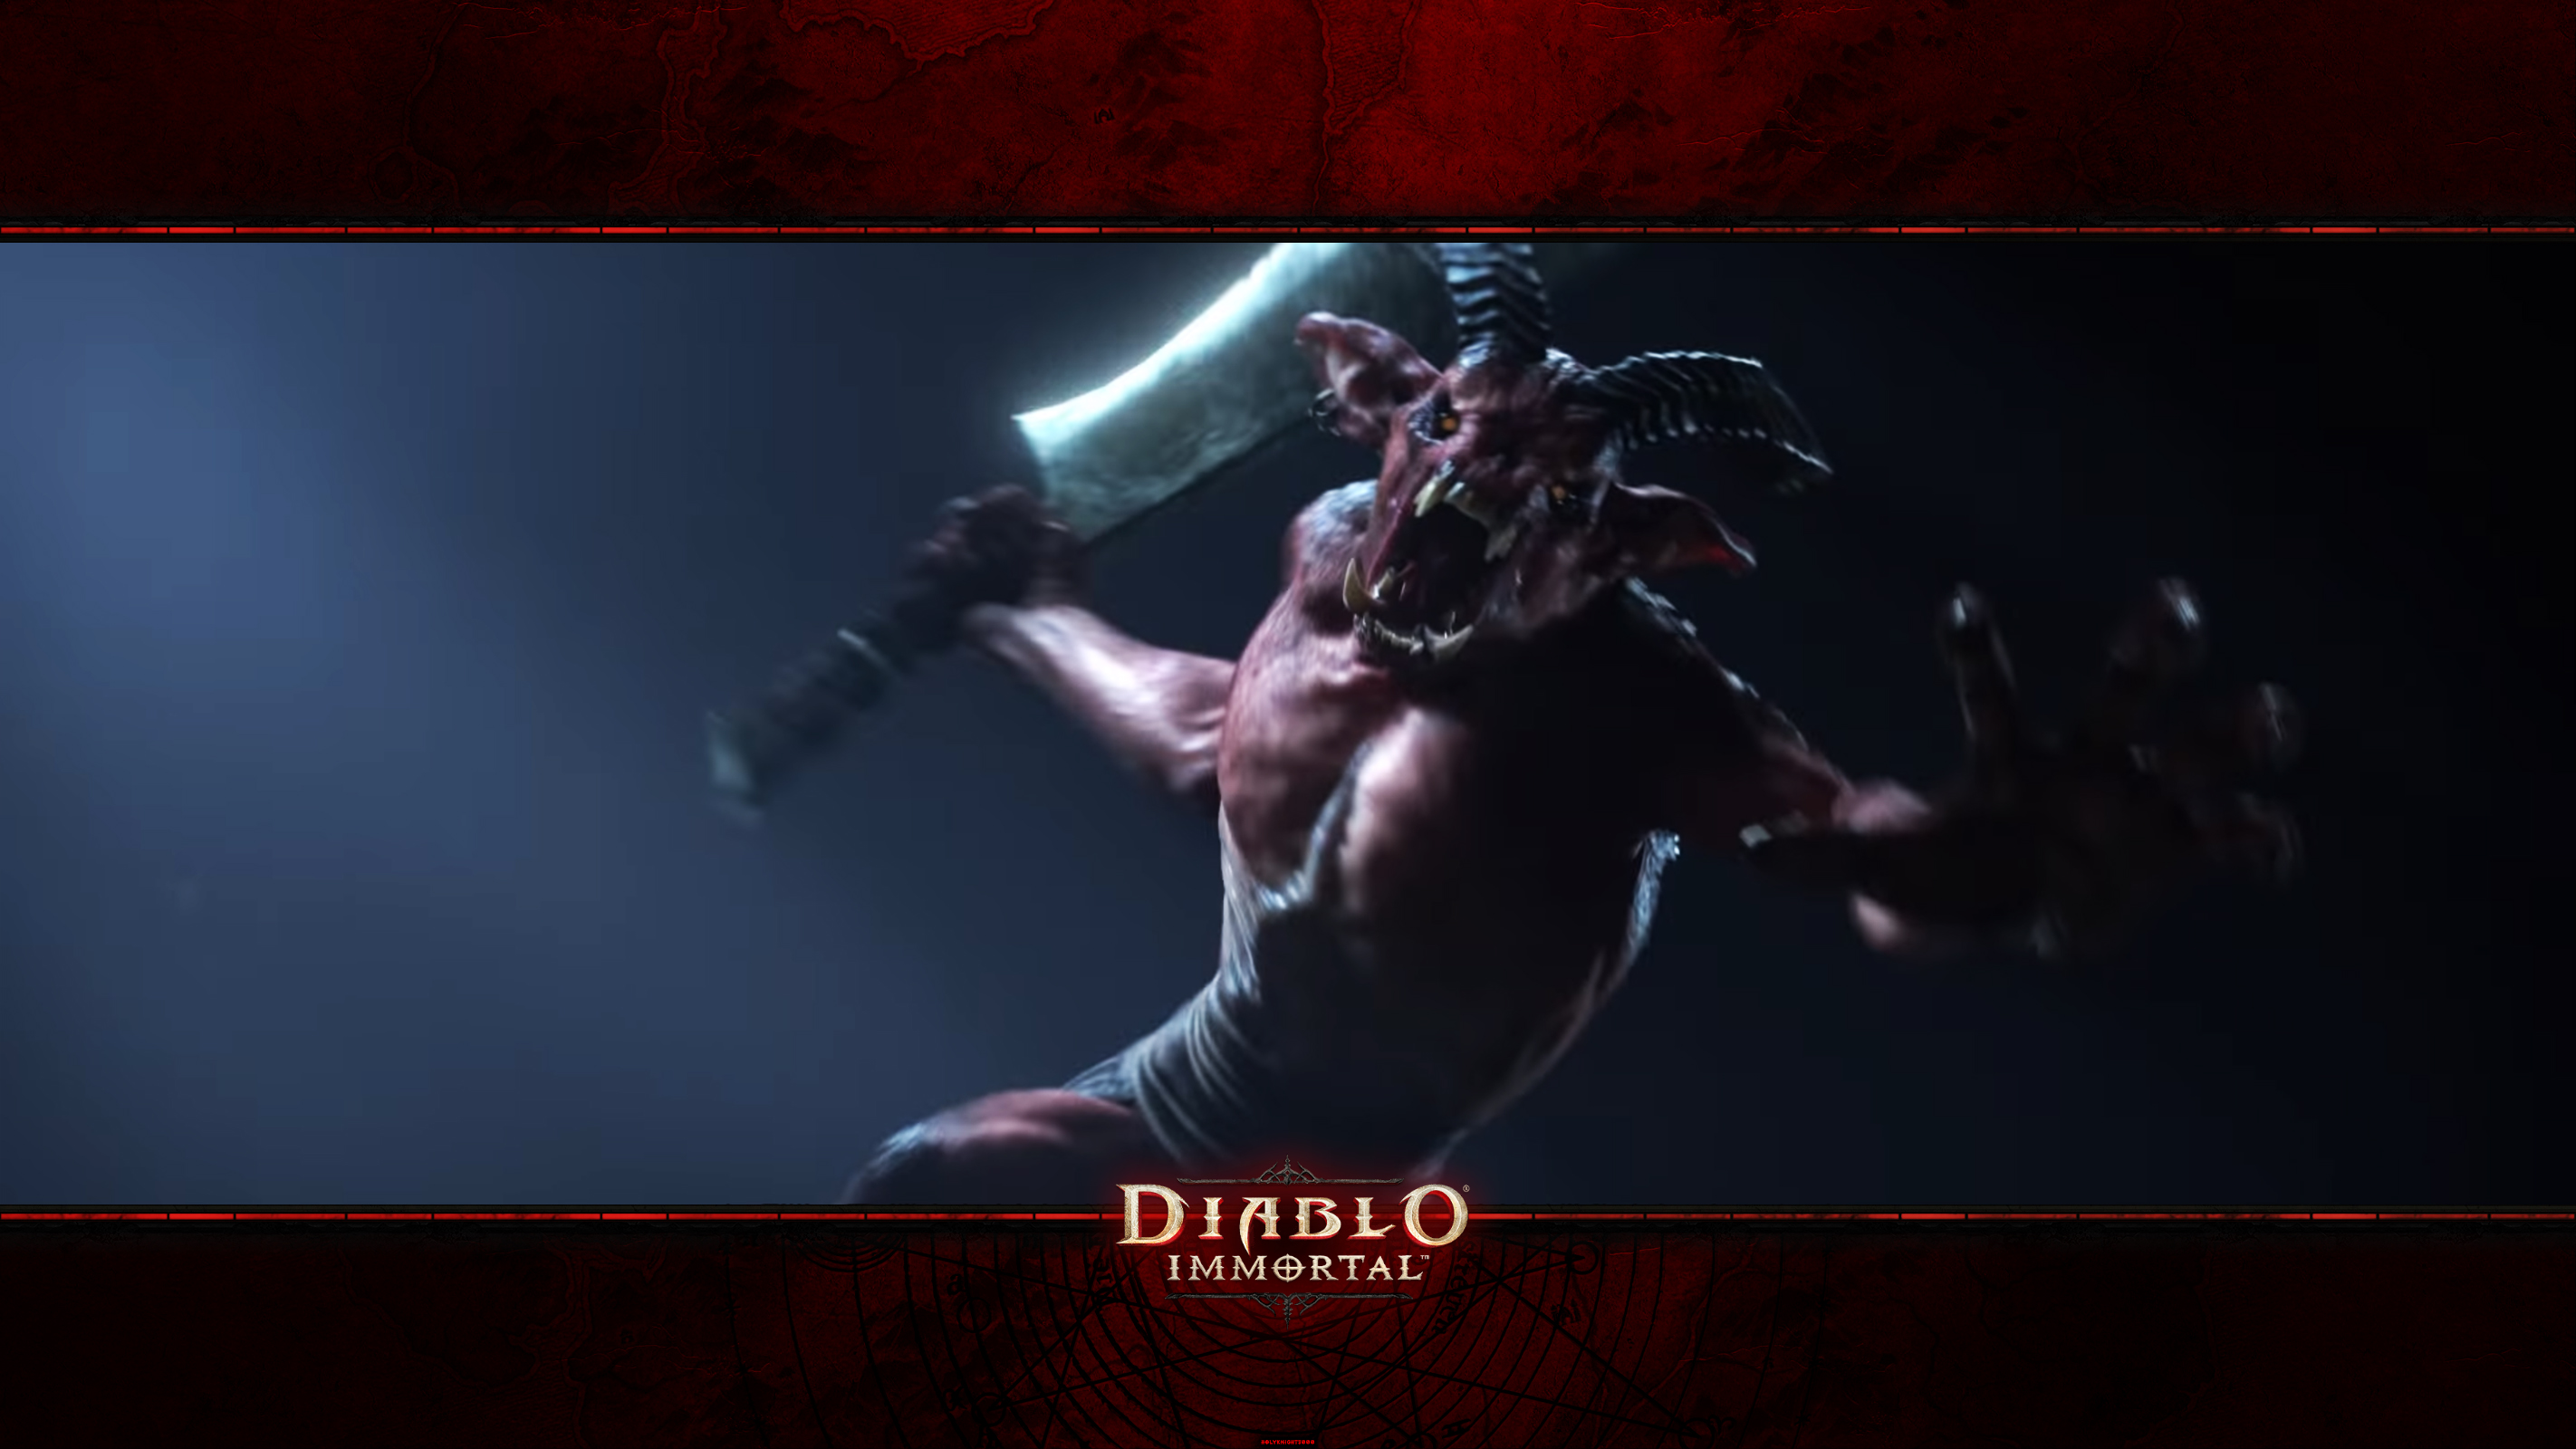 Diablo Immortal Cinematic Reveal #16 Brawl VII - Above!